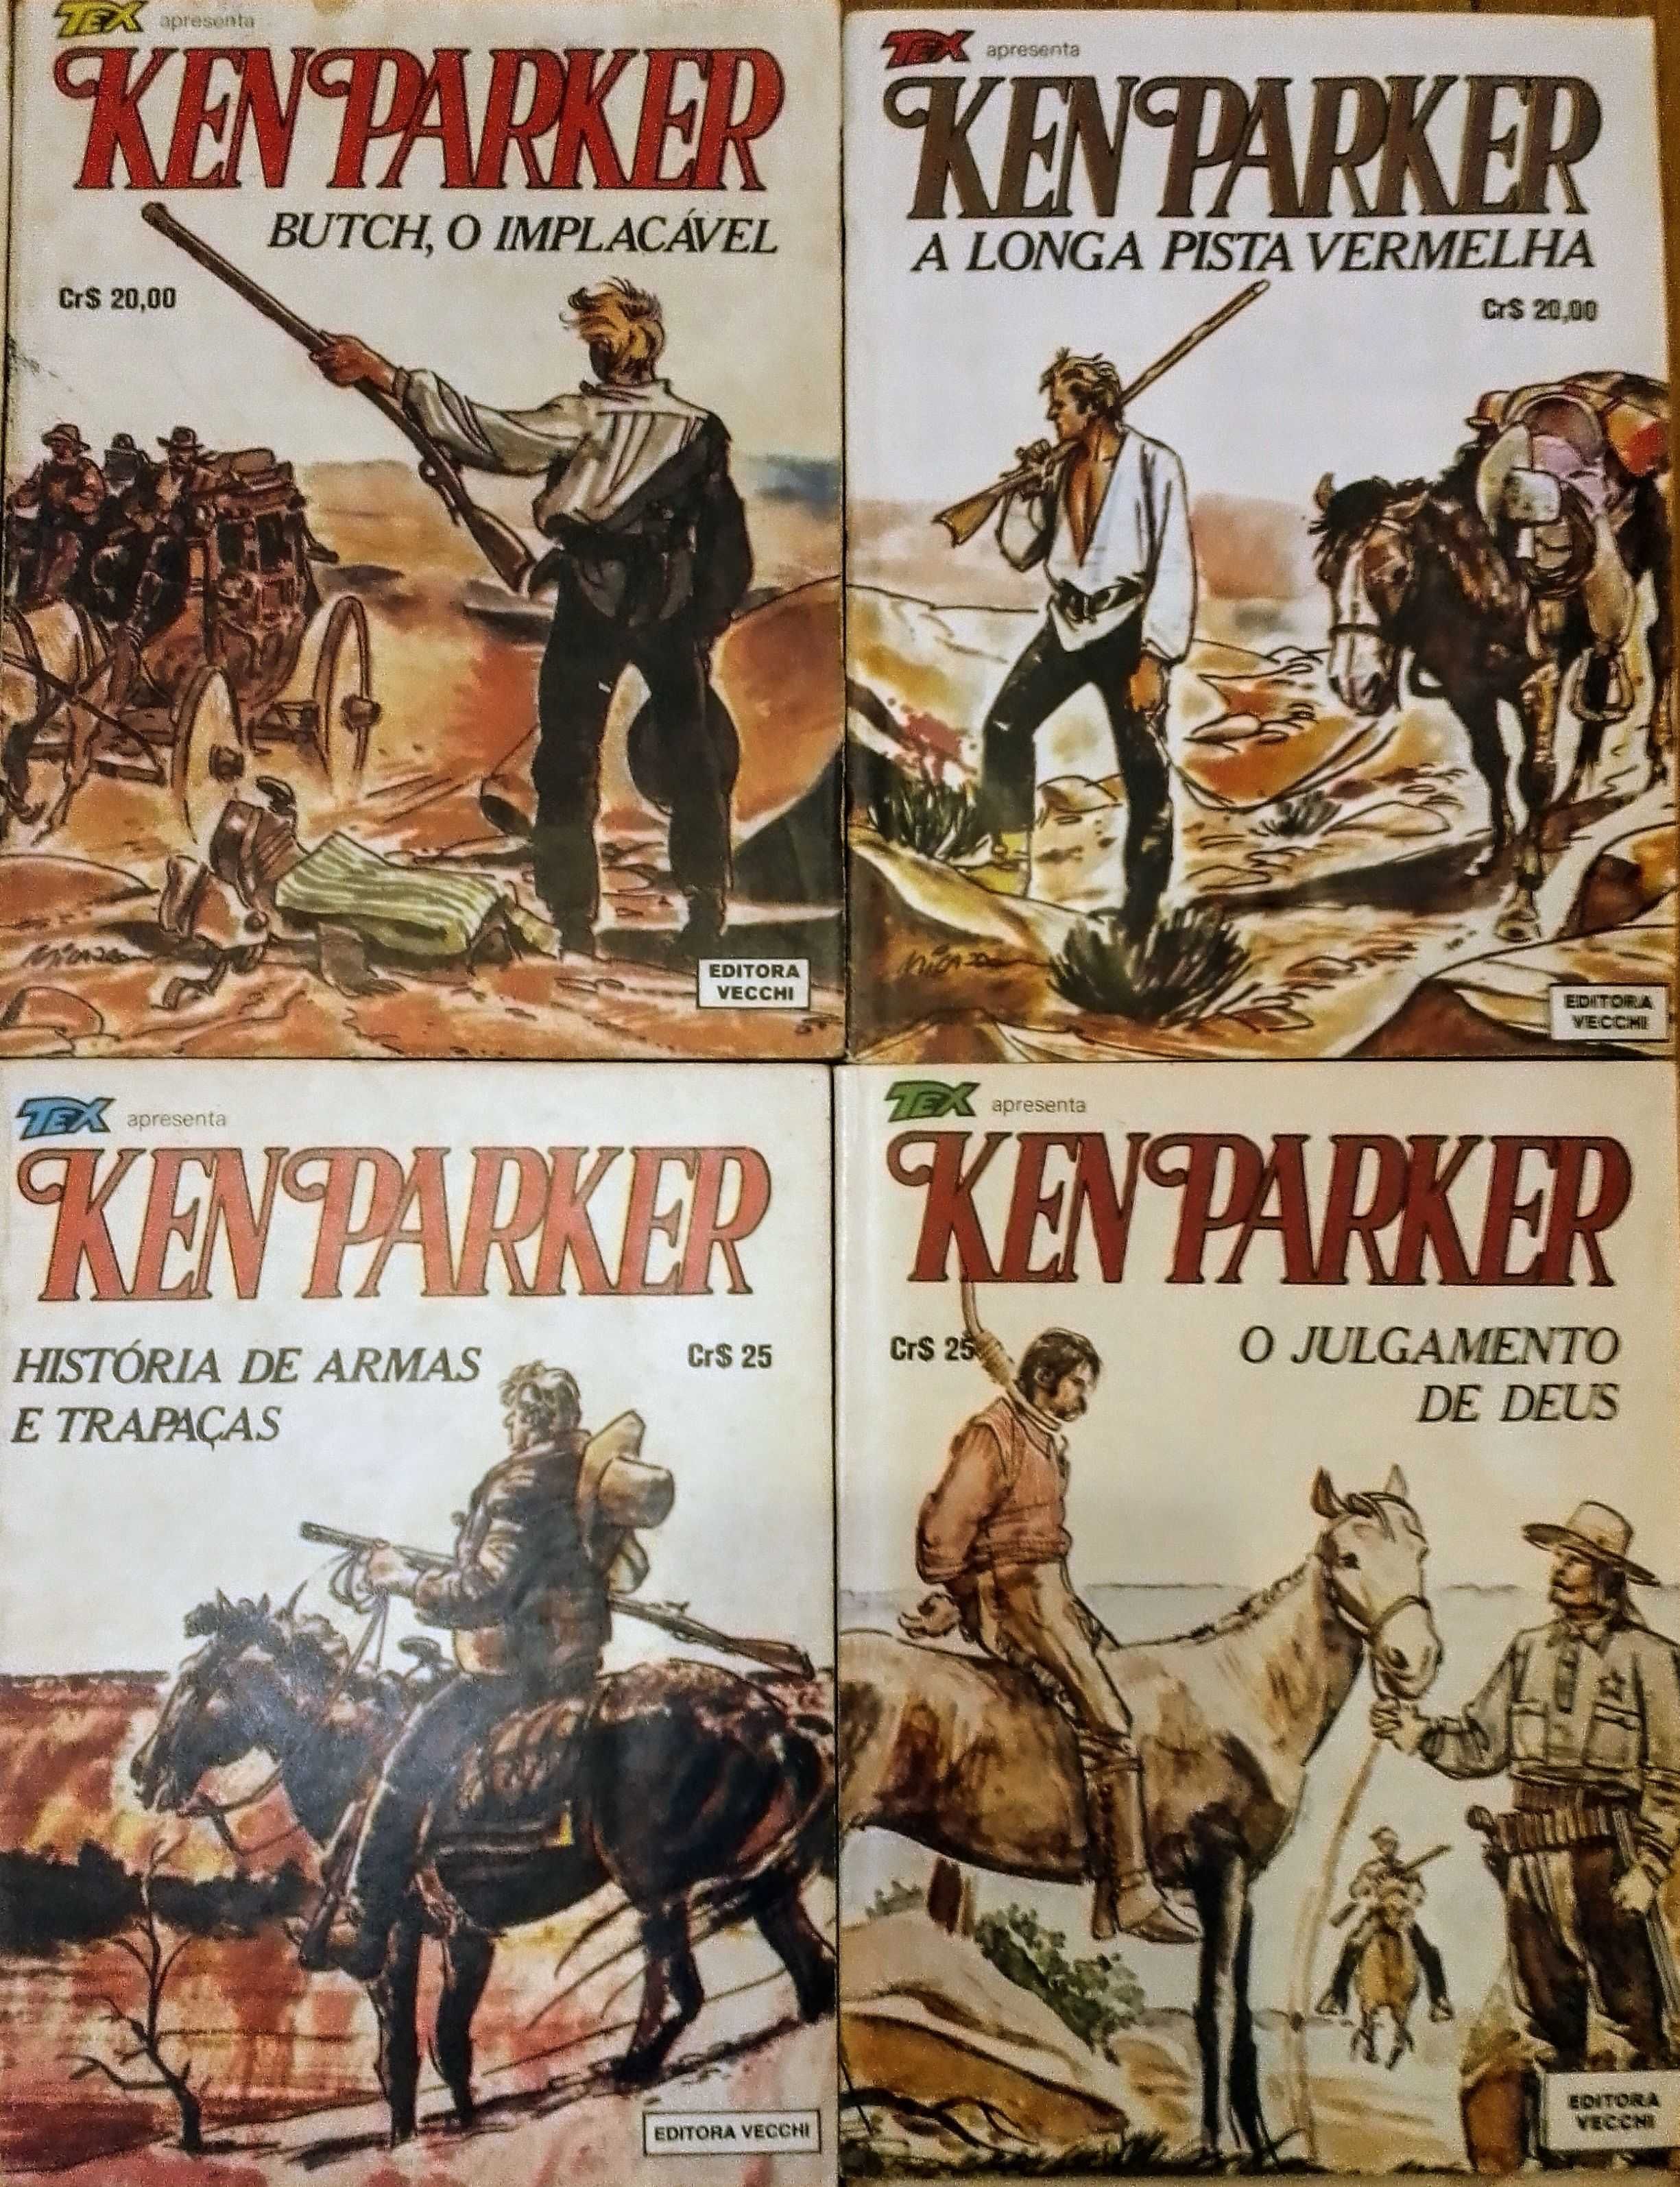 Ken Parker (Editora Vecchi)